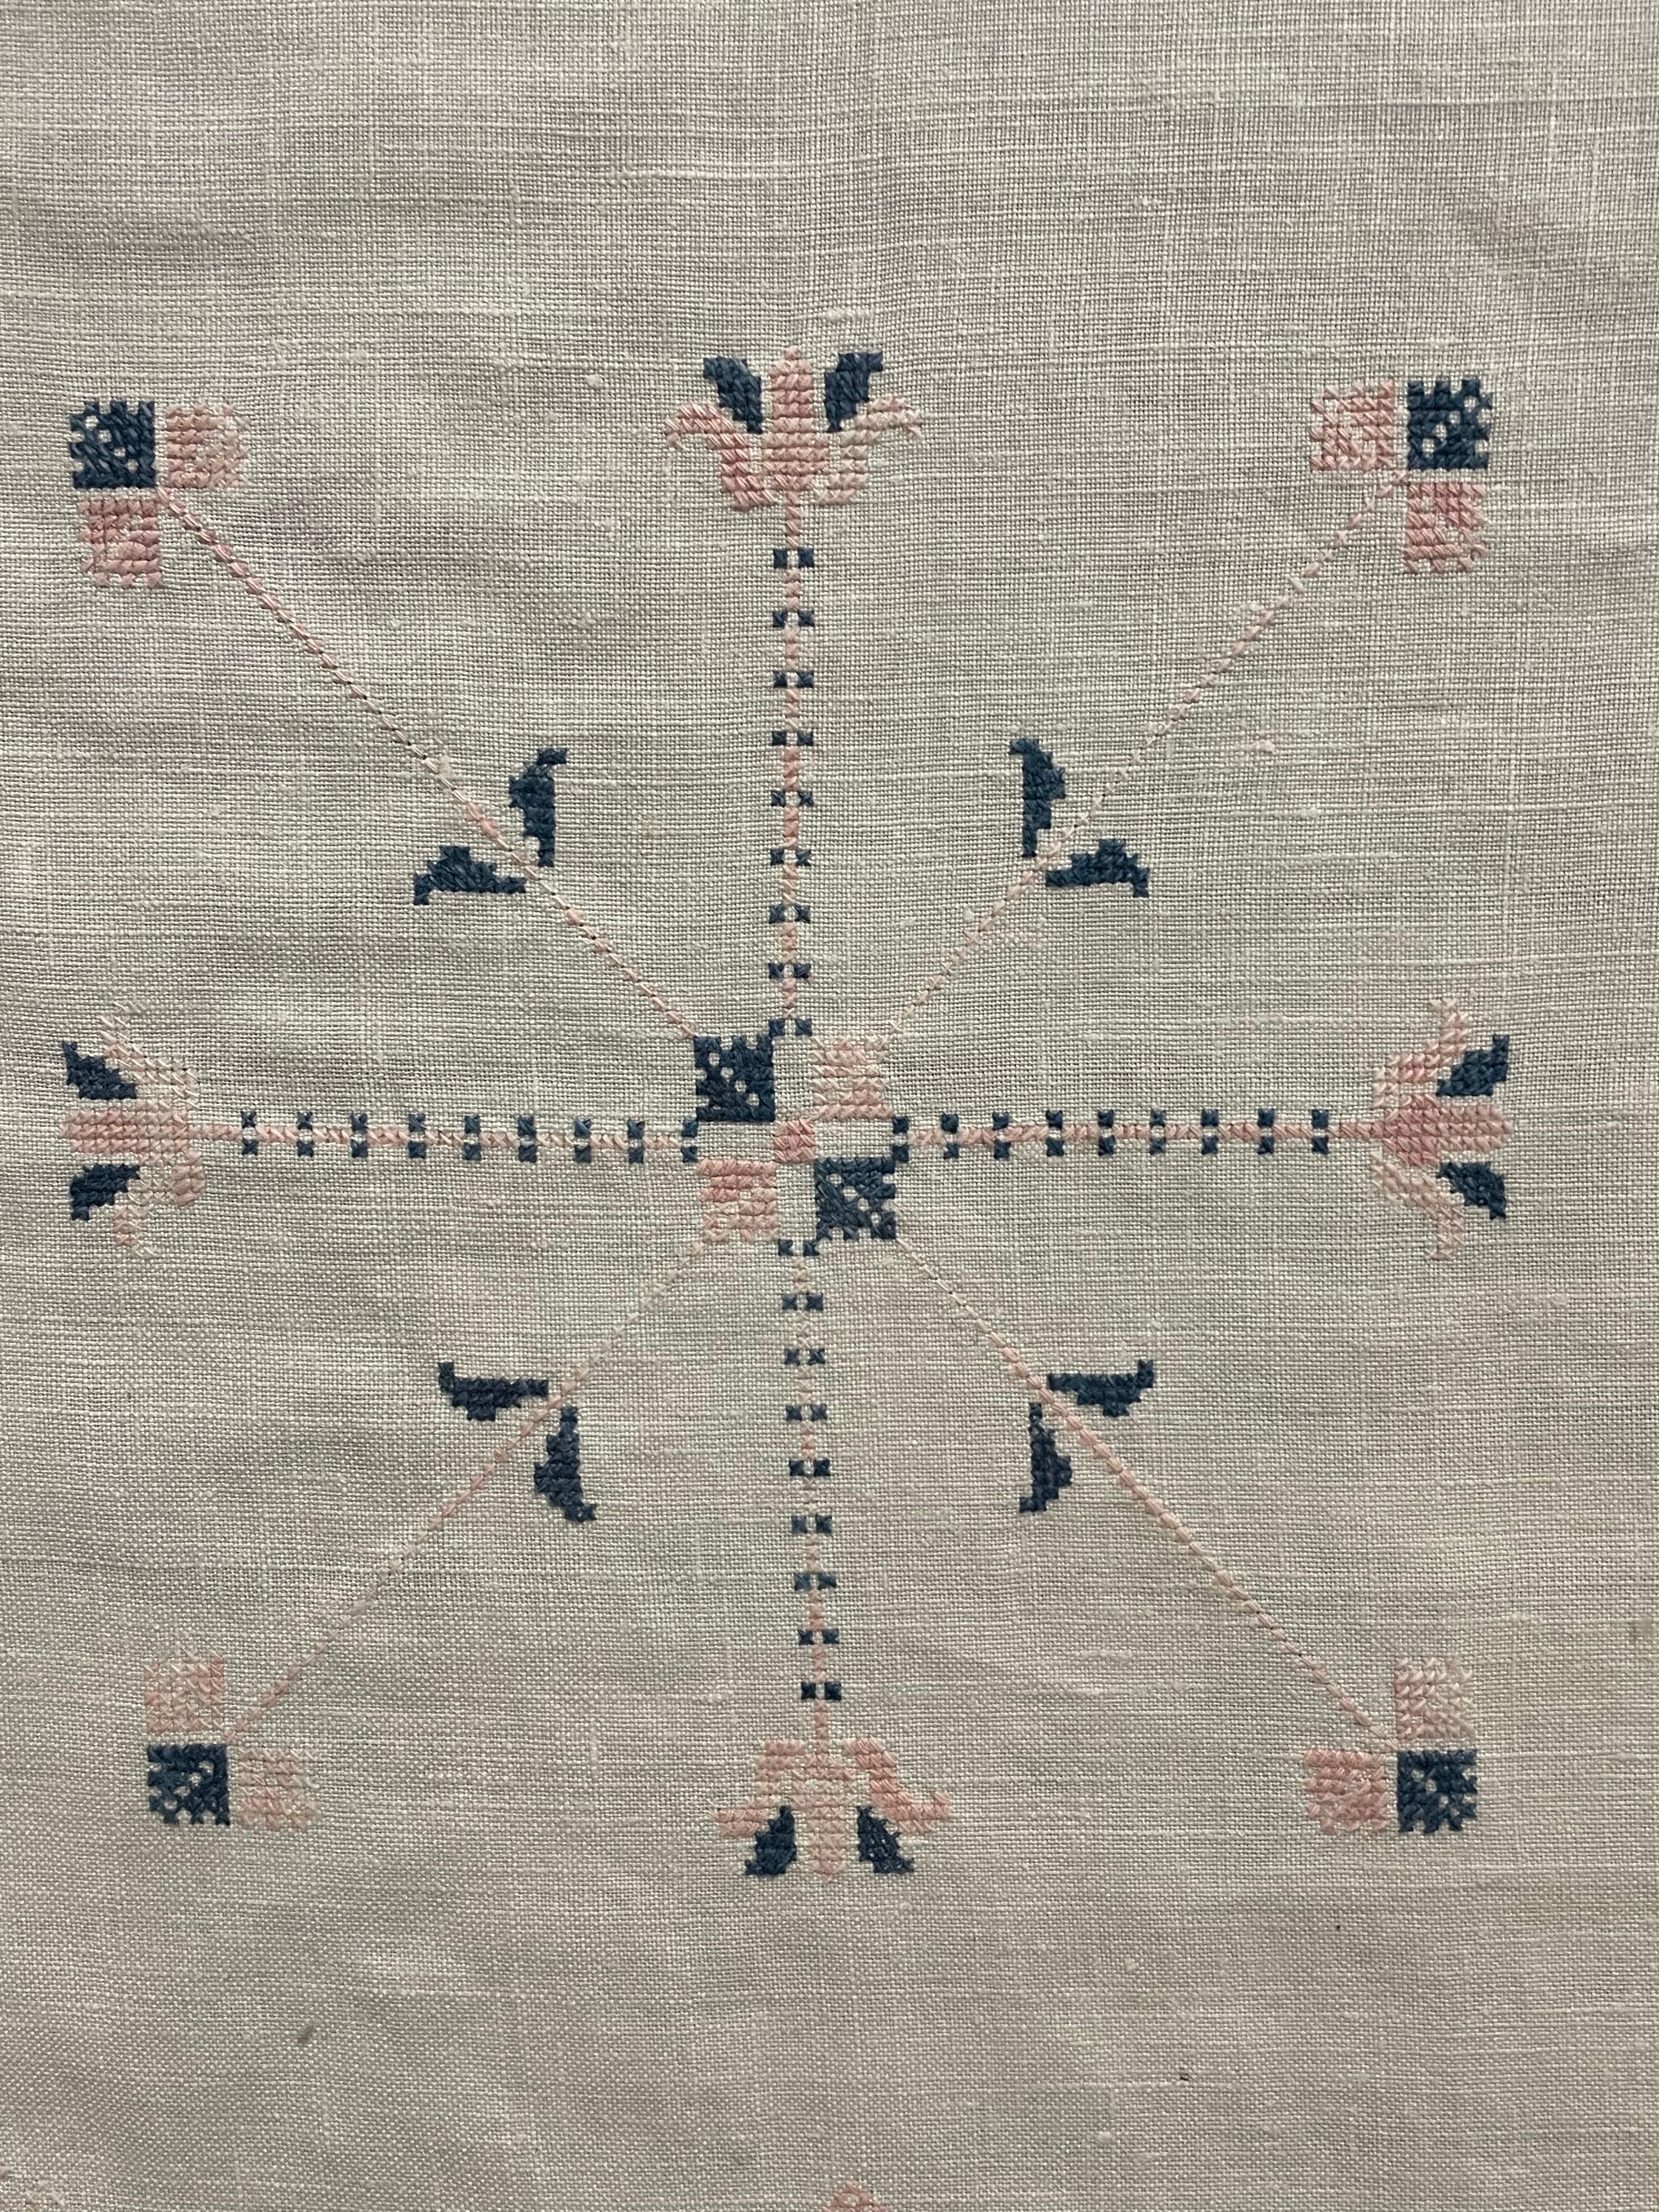 Early 19th Century Needlework 